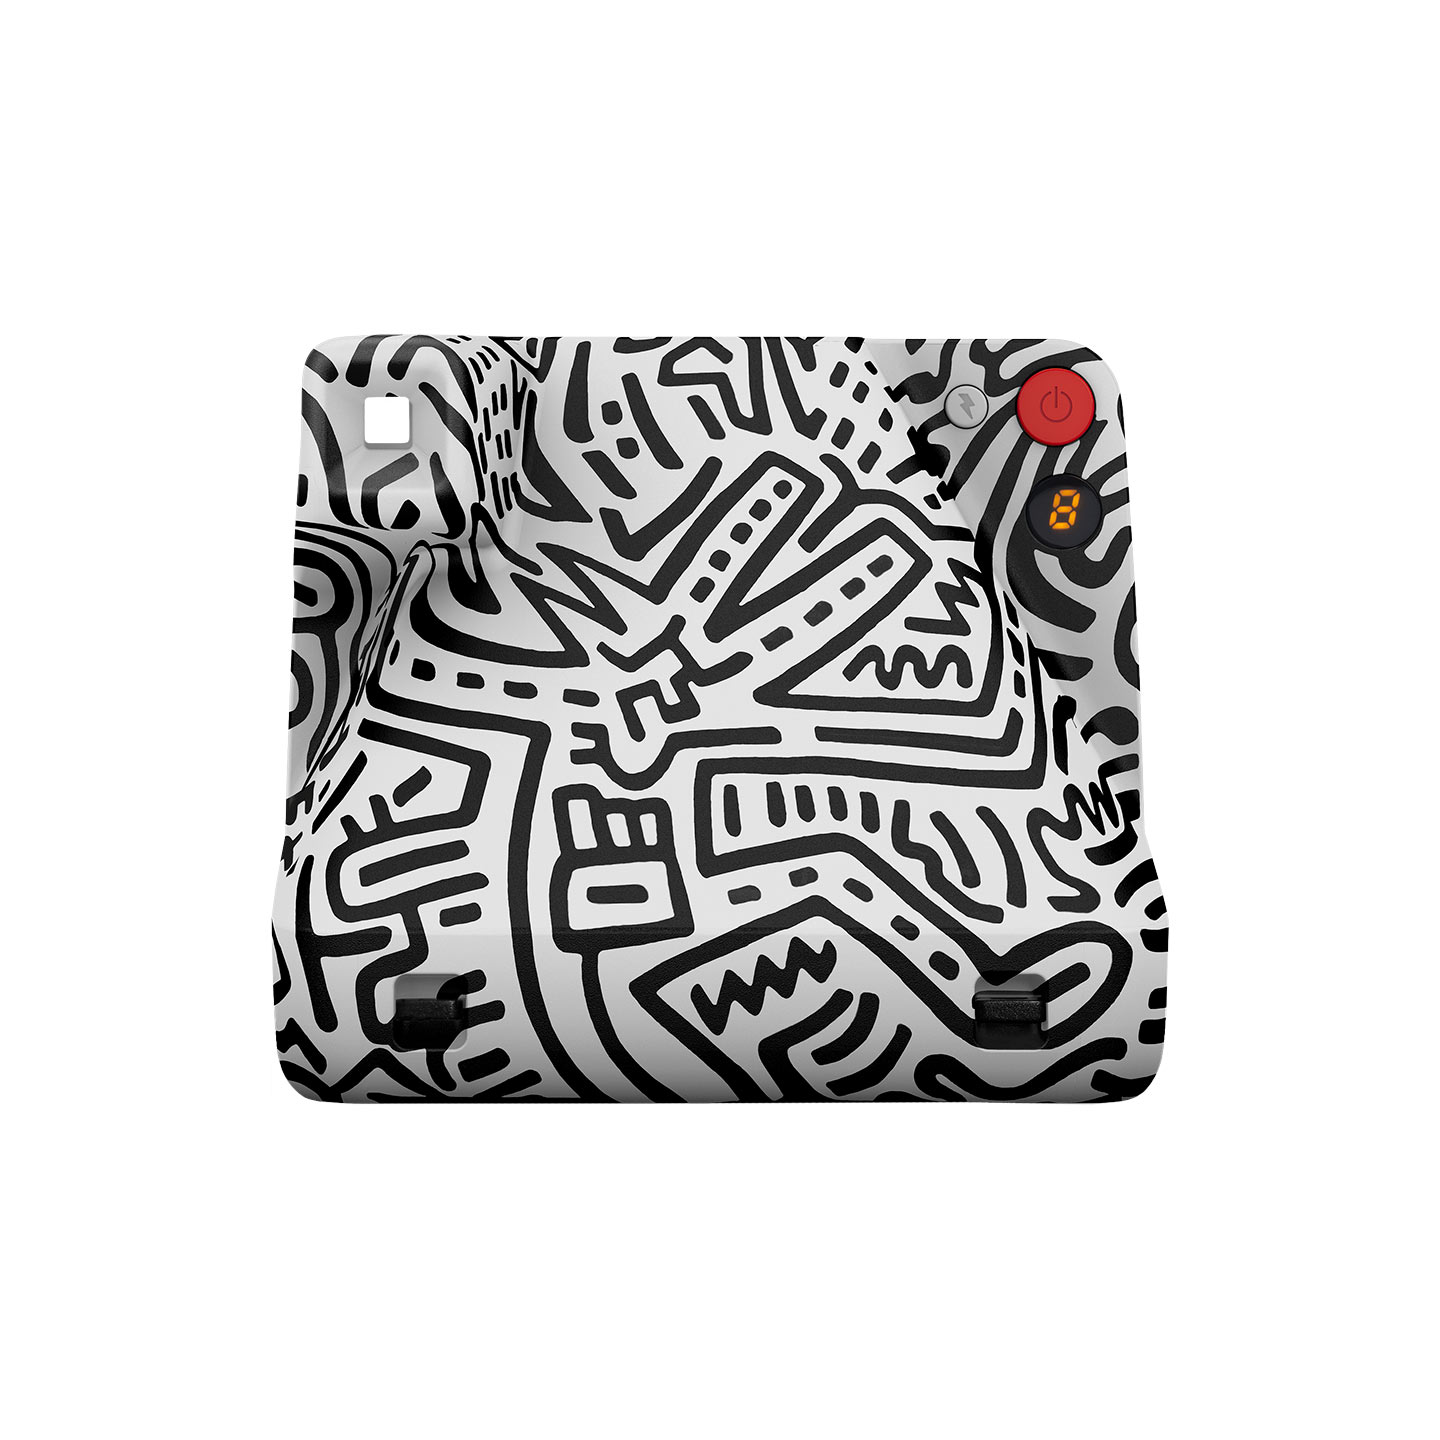 Polaroid Now : Keith Haring Edition